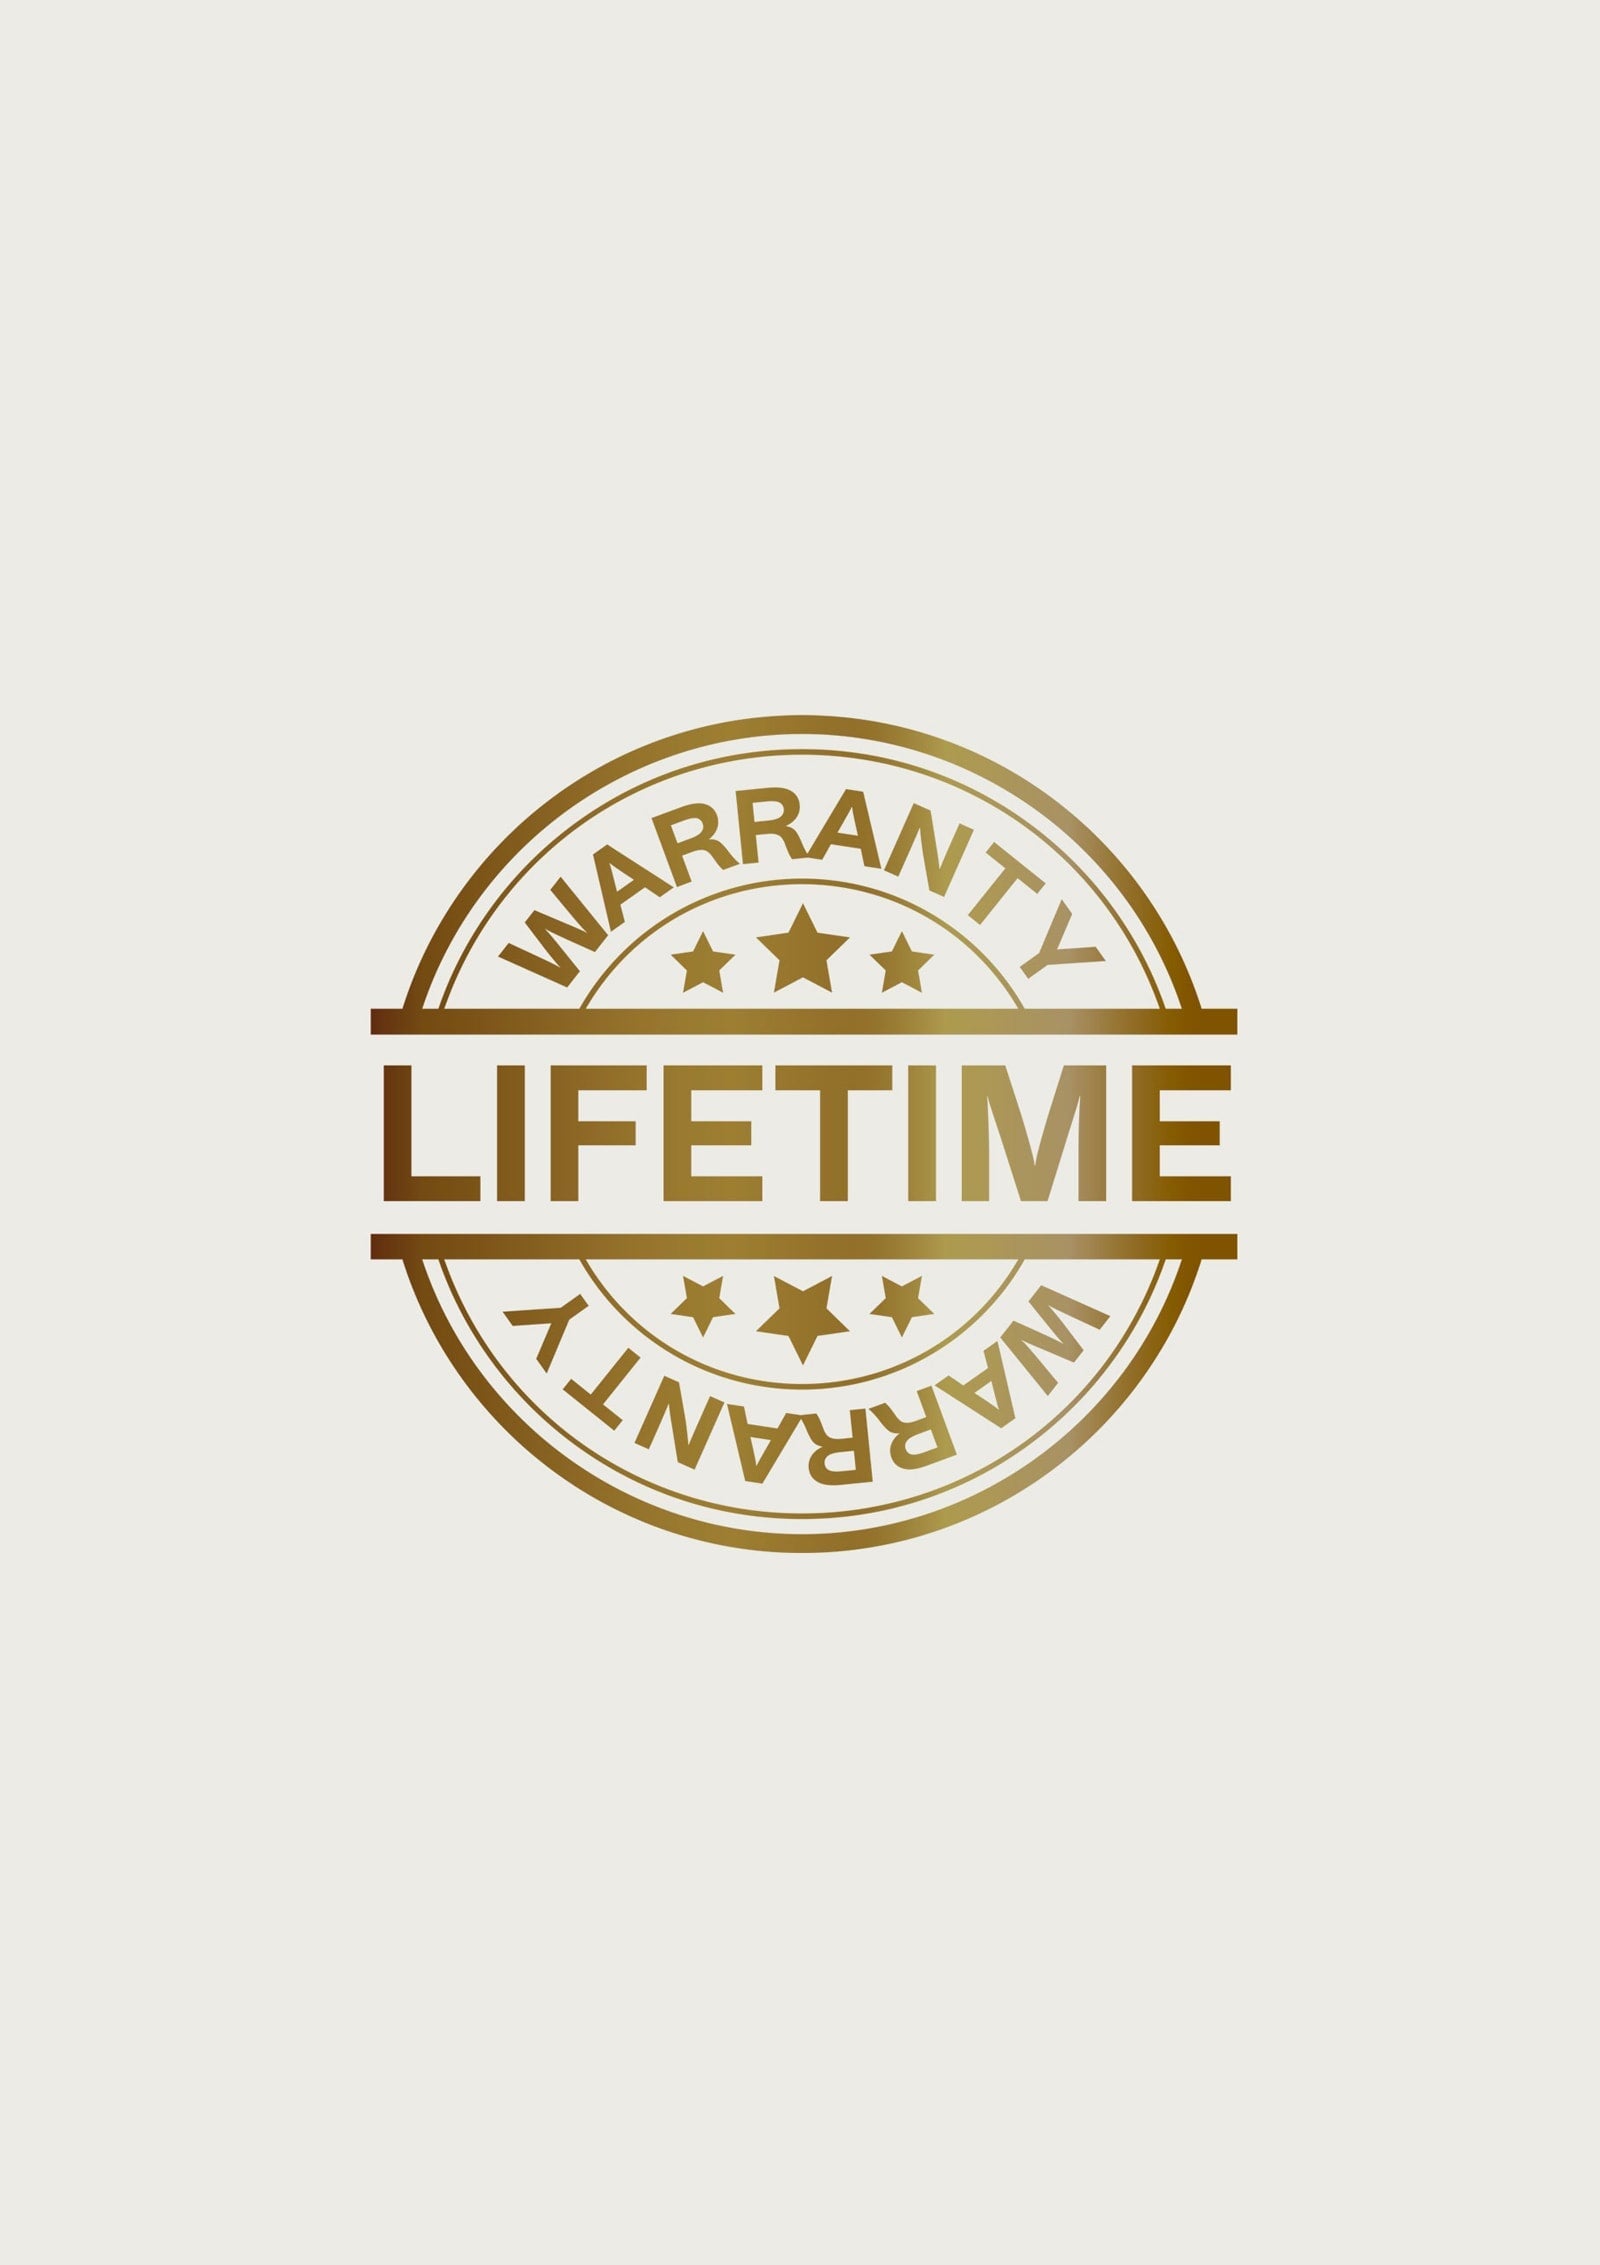 Lifetime Extended Warranty